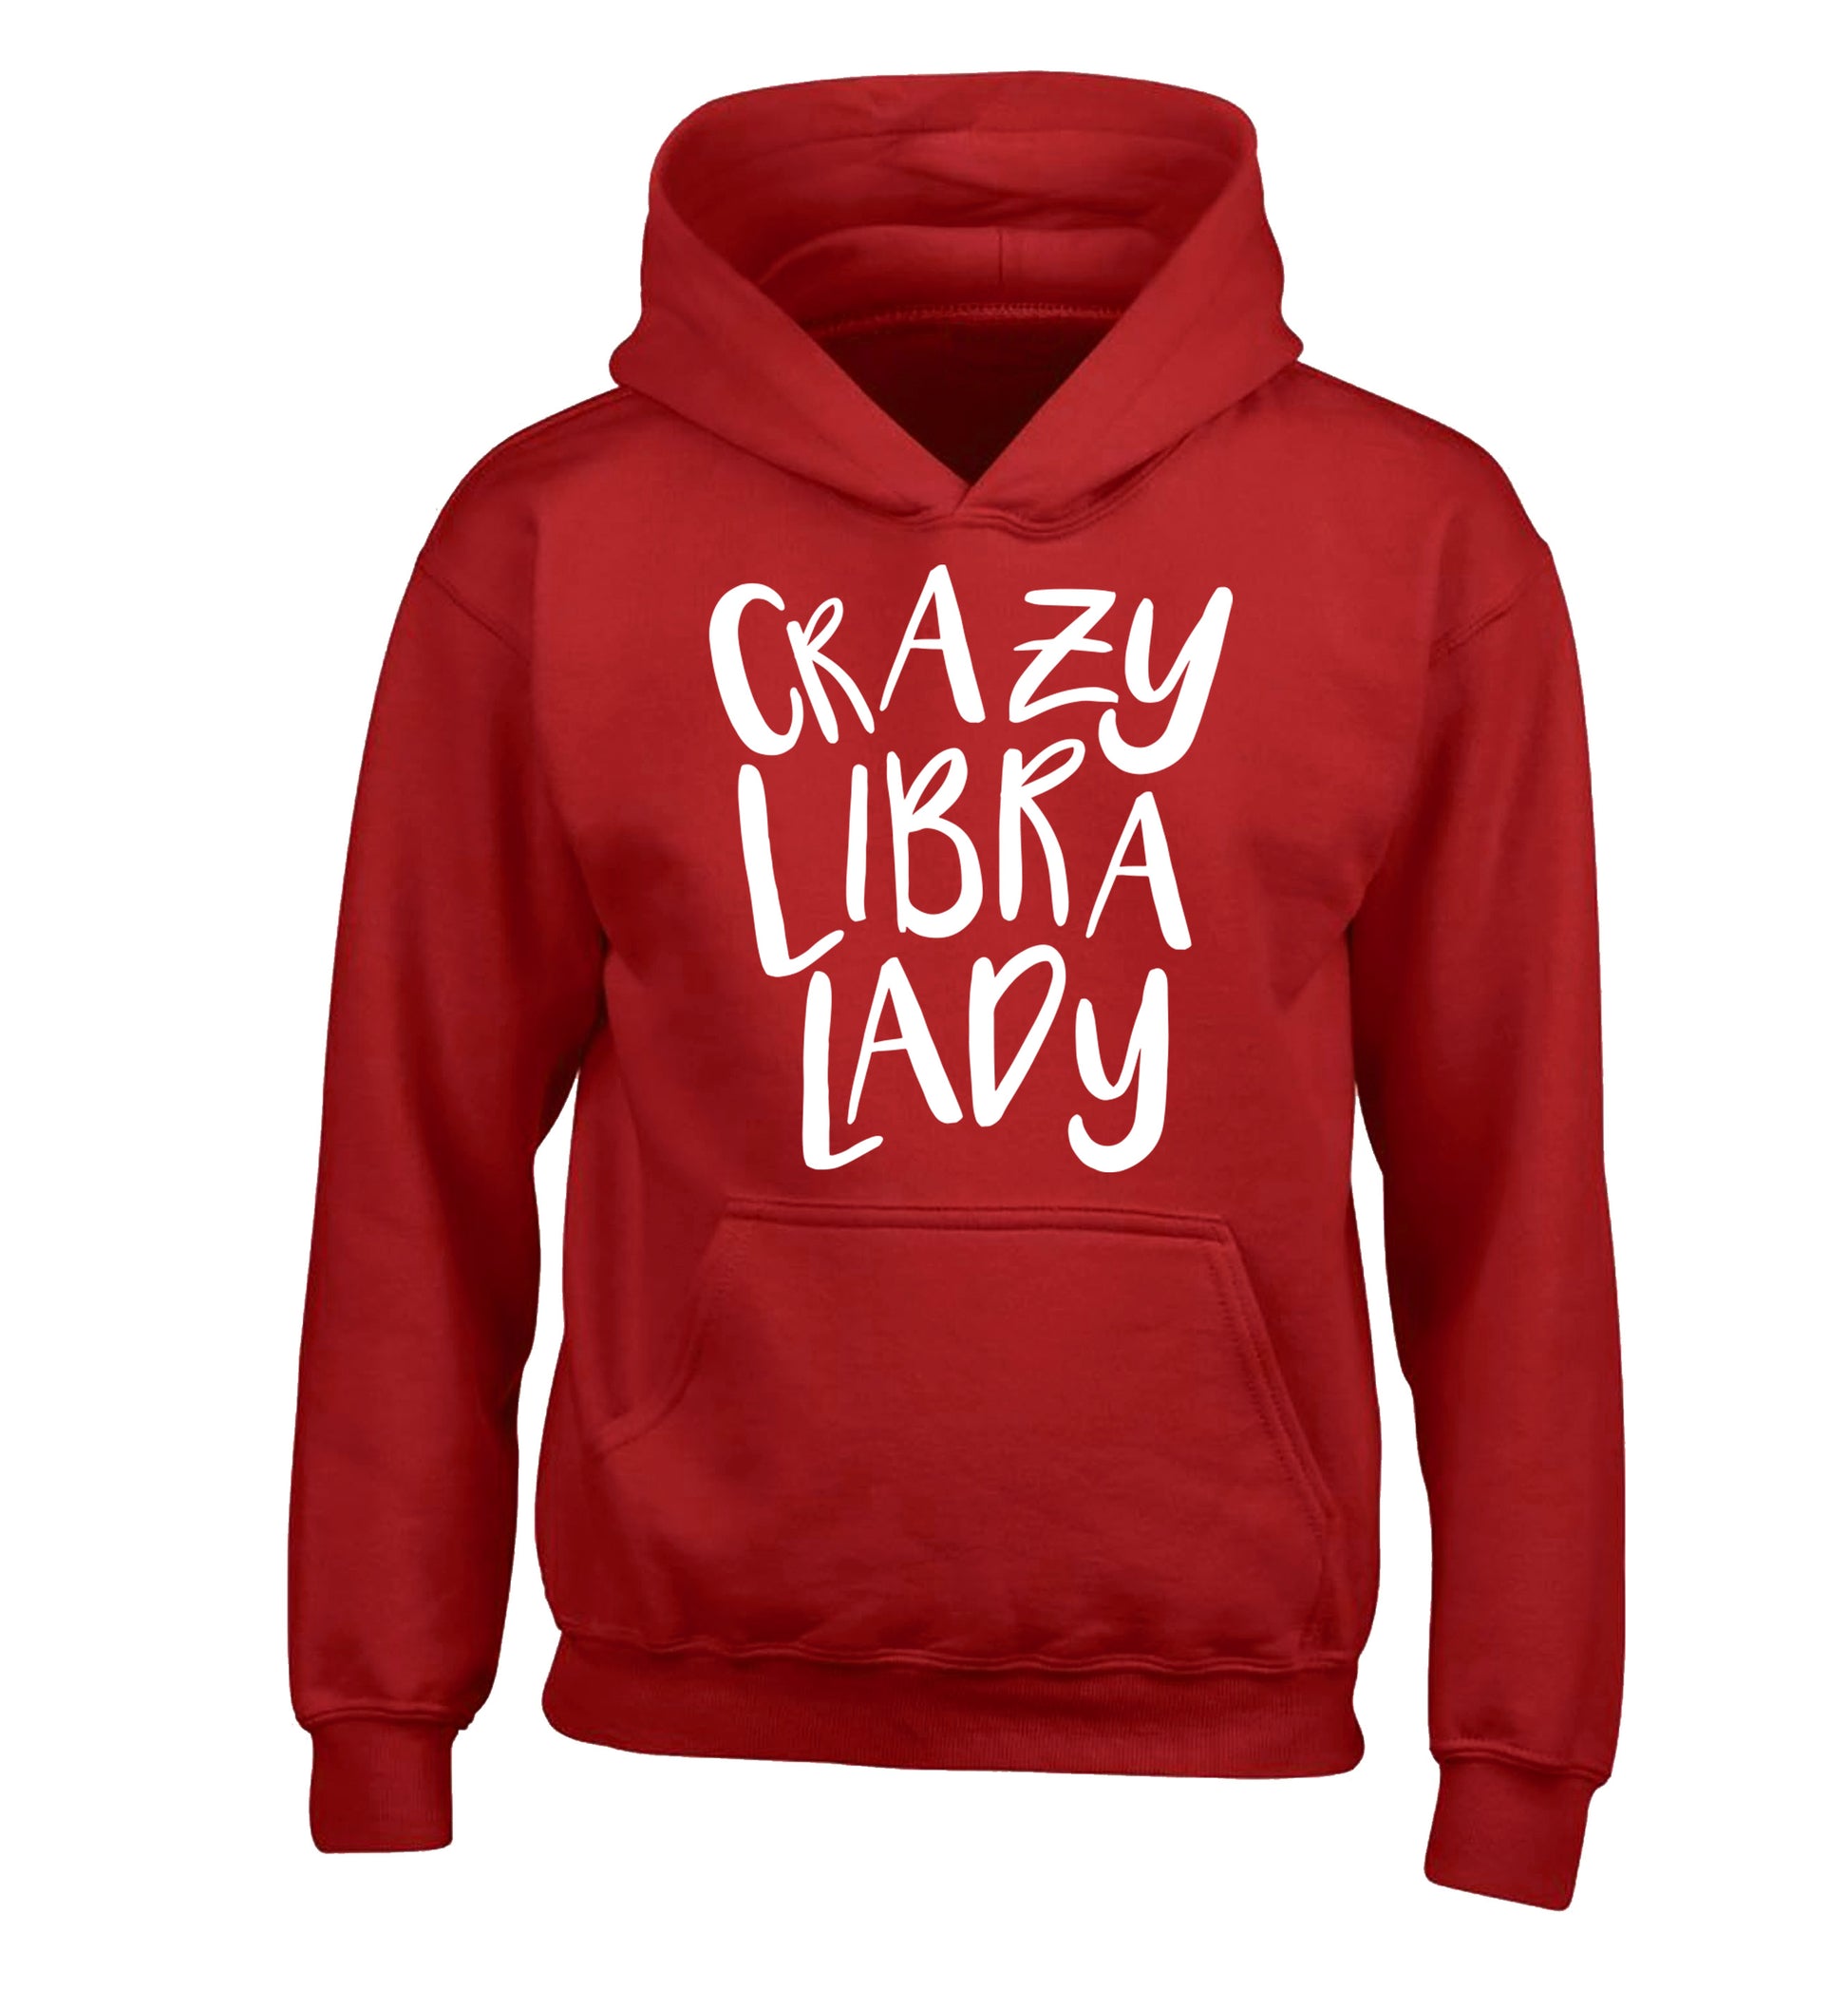 Crazy libra lady children's red hoodie 12-13 Years